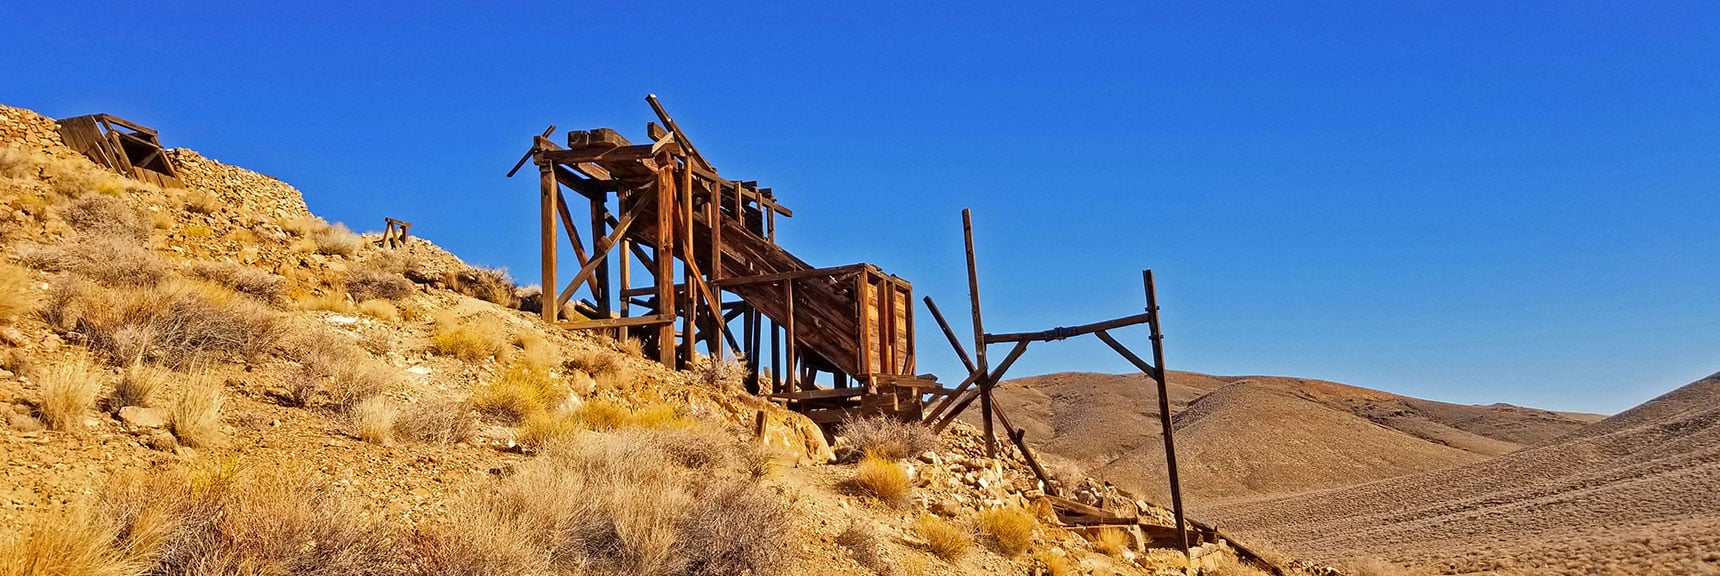 Side View of Cashier Mill | Eureka Mine, Harrisburg, Cashier Mill, Death Valley, California